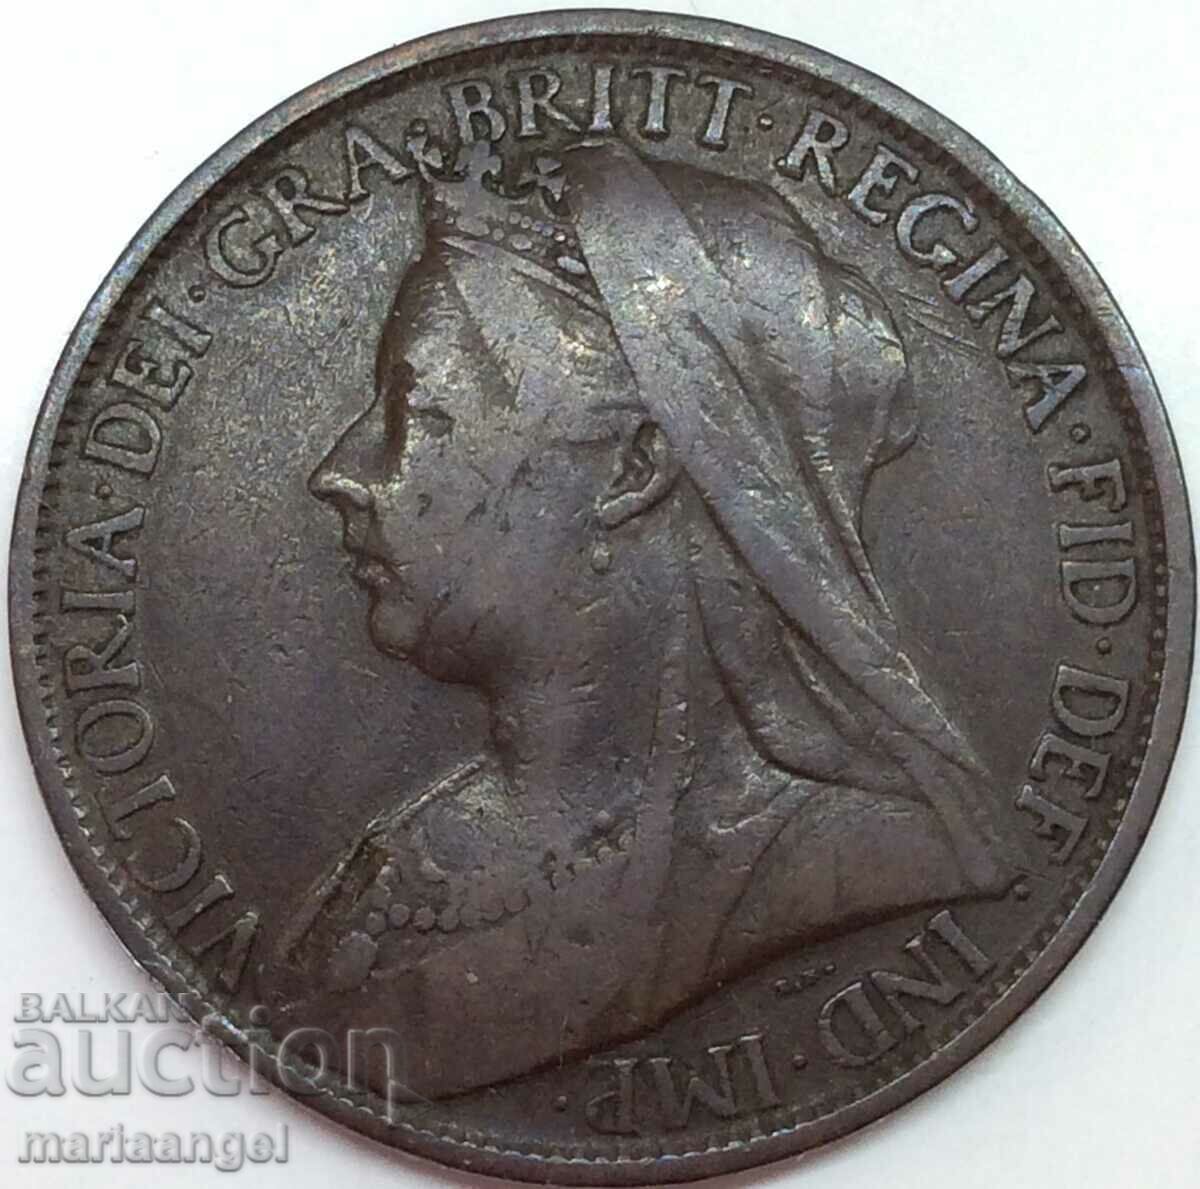 Great Britain 1 penny 1901 30mm - quite rare